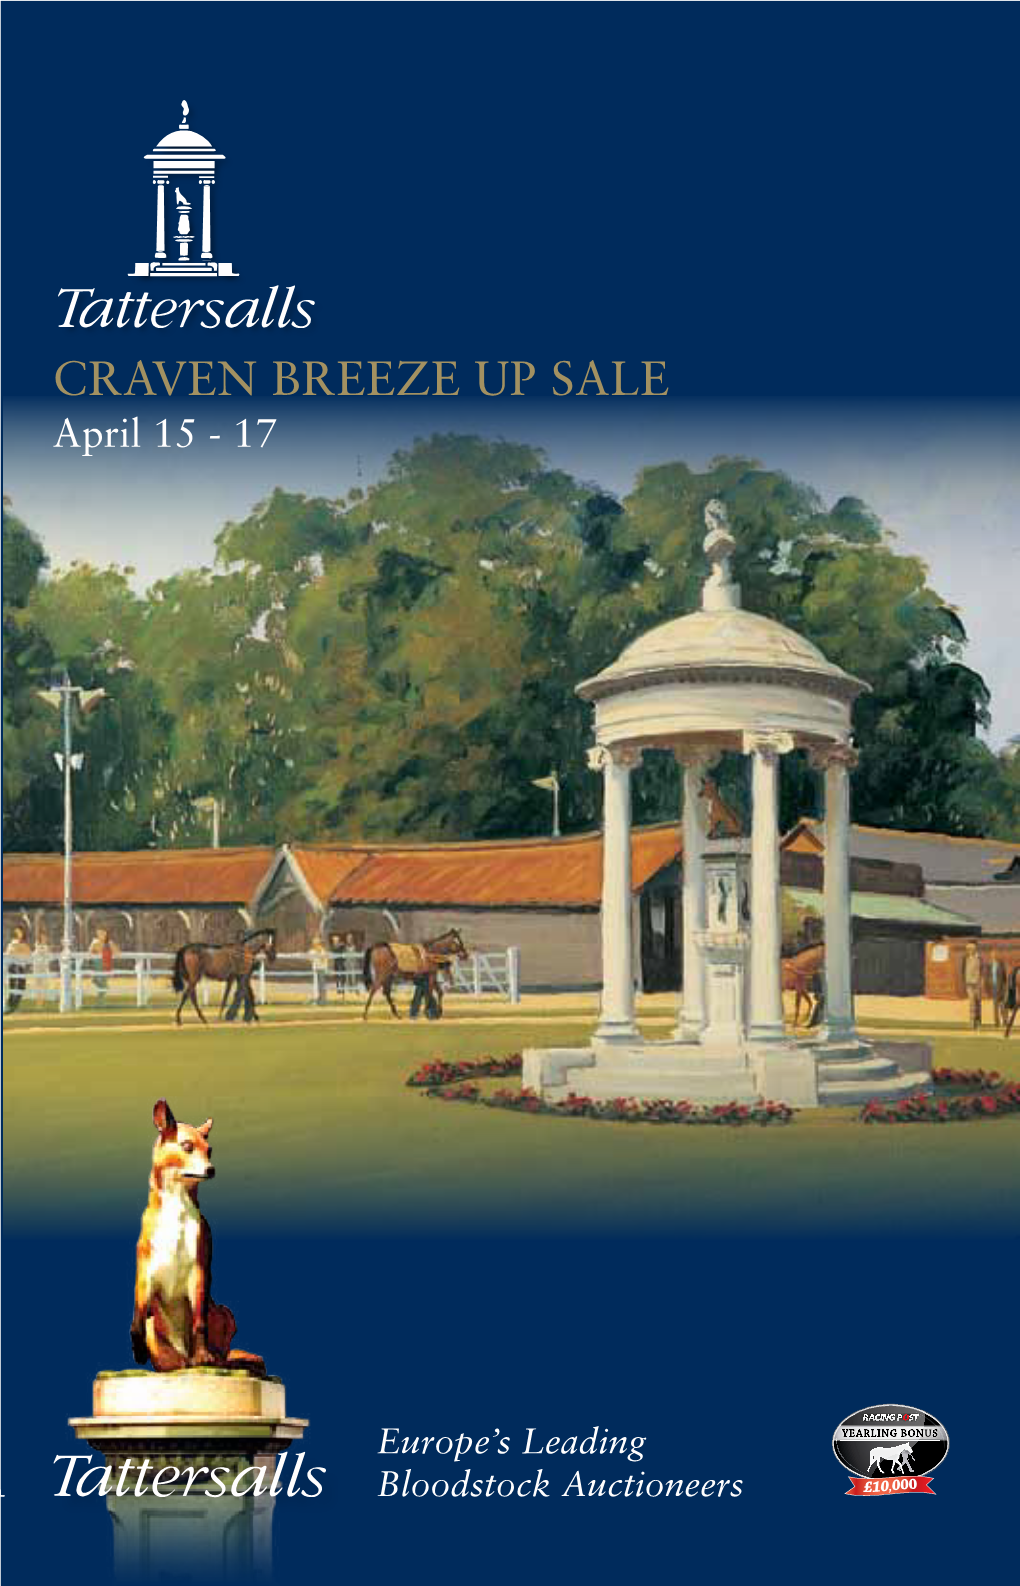 Tattersalls Craven Breeze up Sale 2014